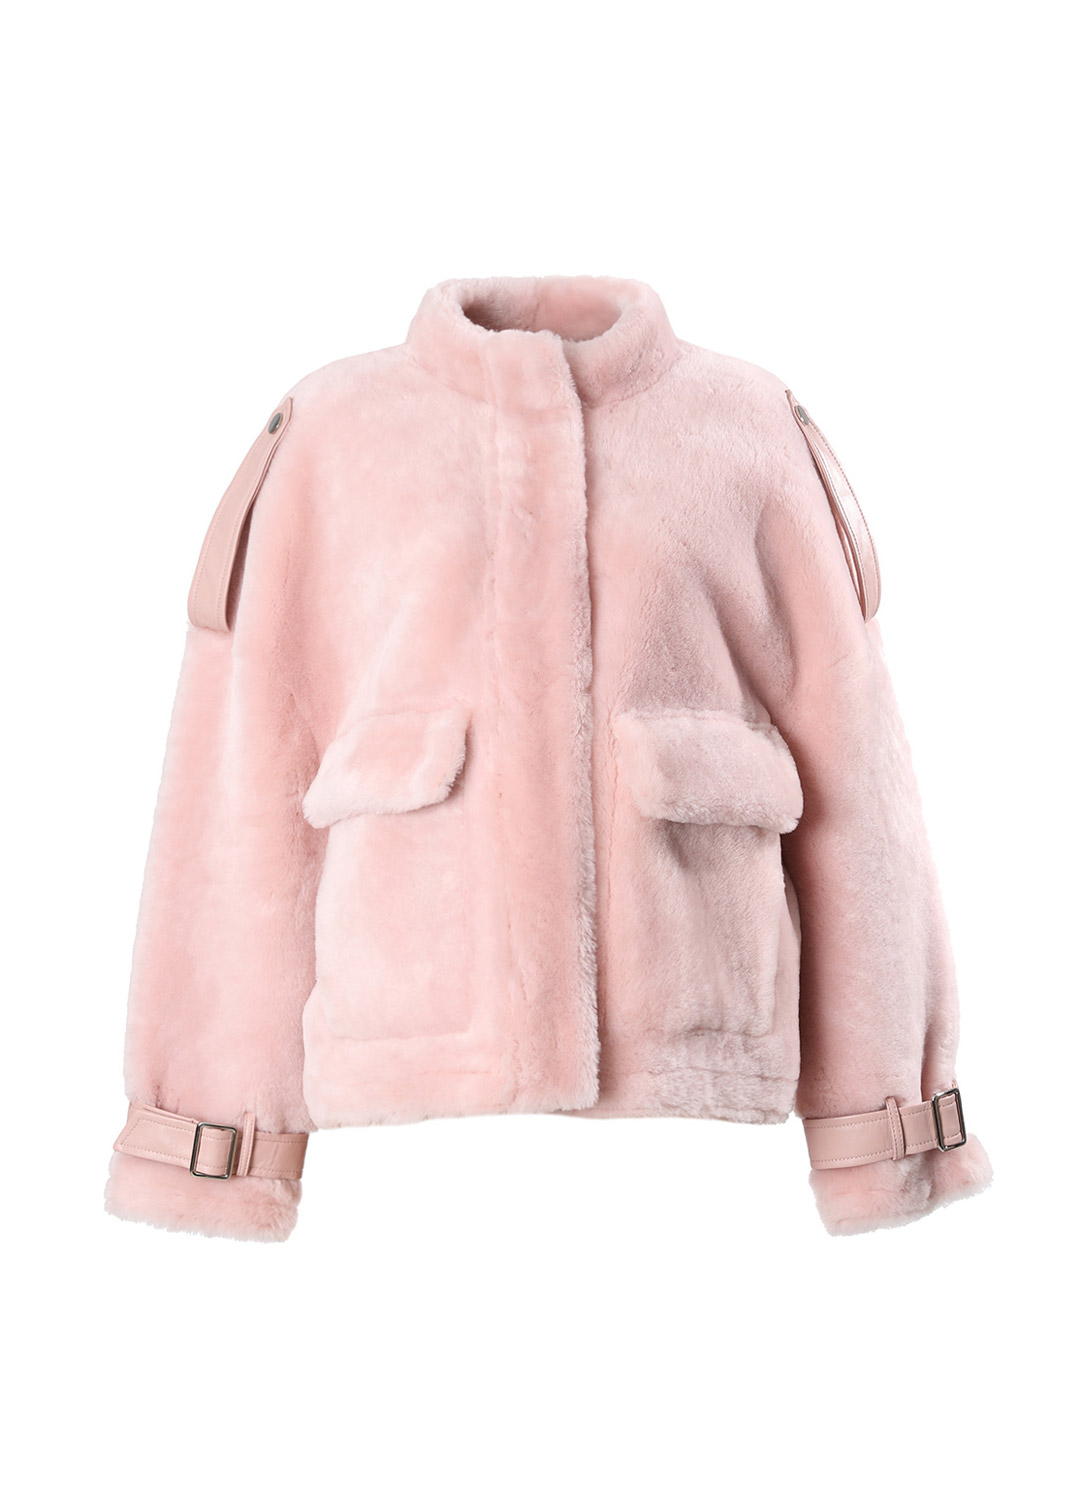 Lovely lamb coat [Baby pink]